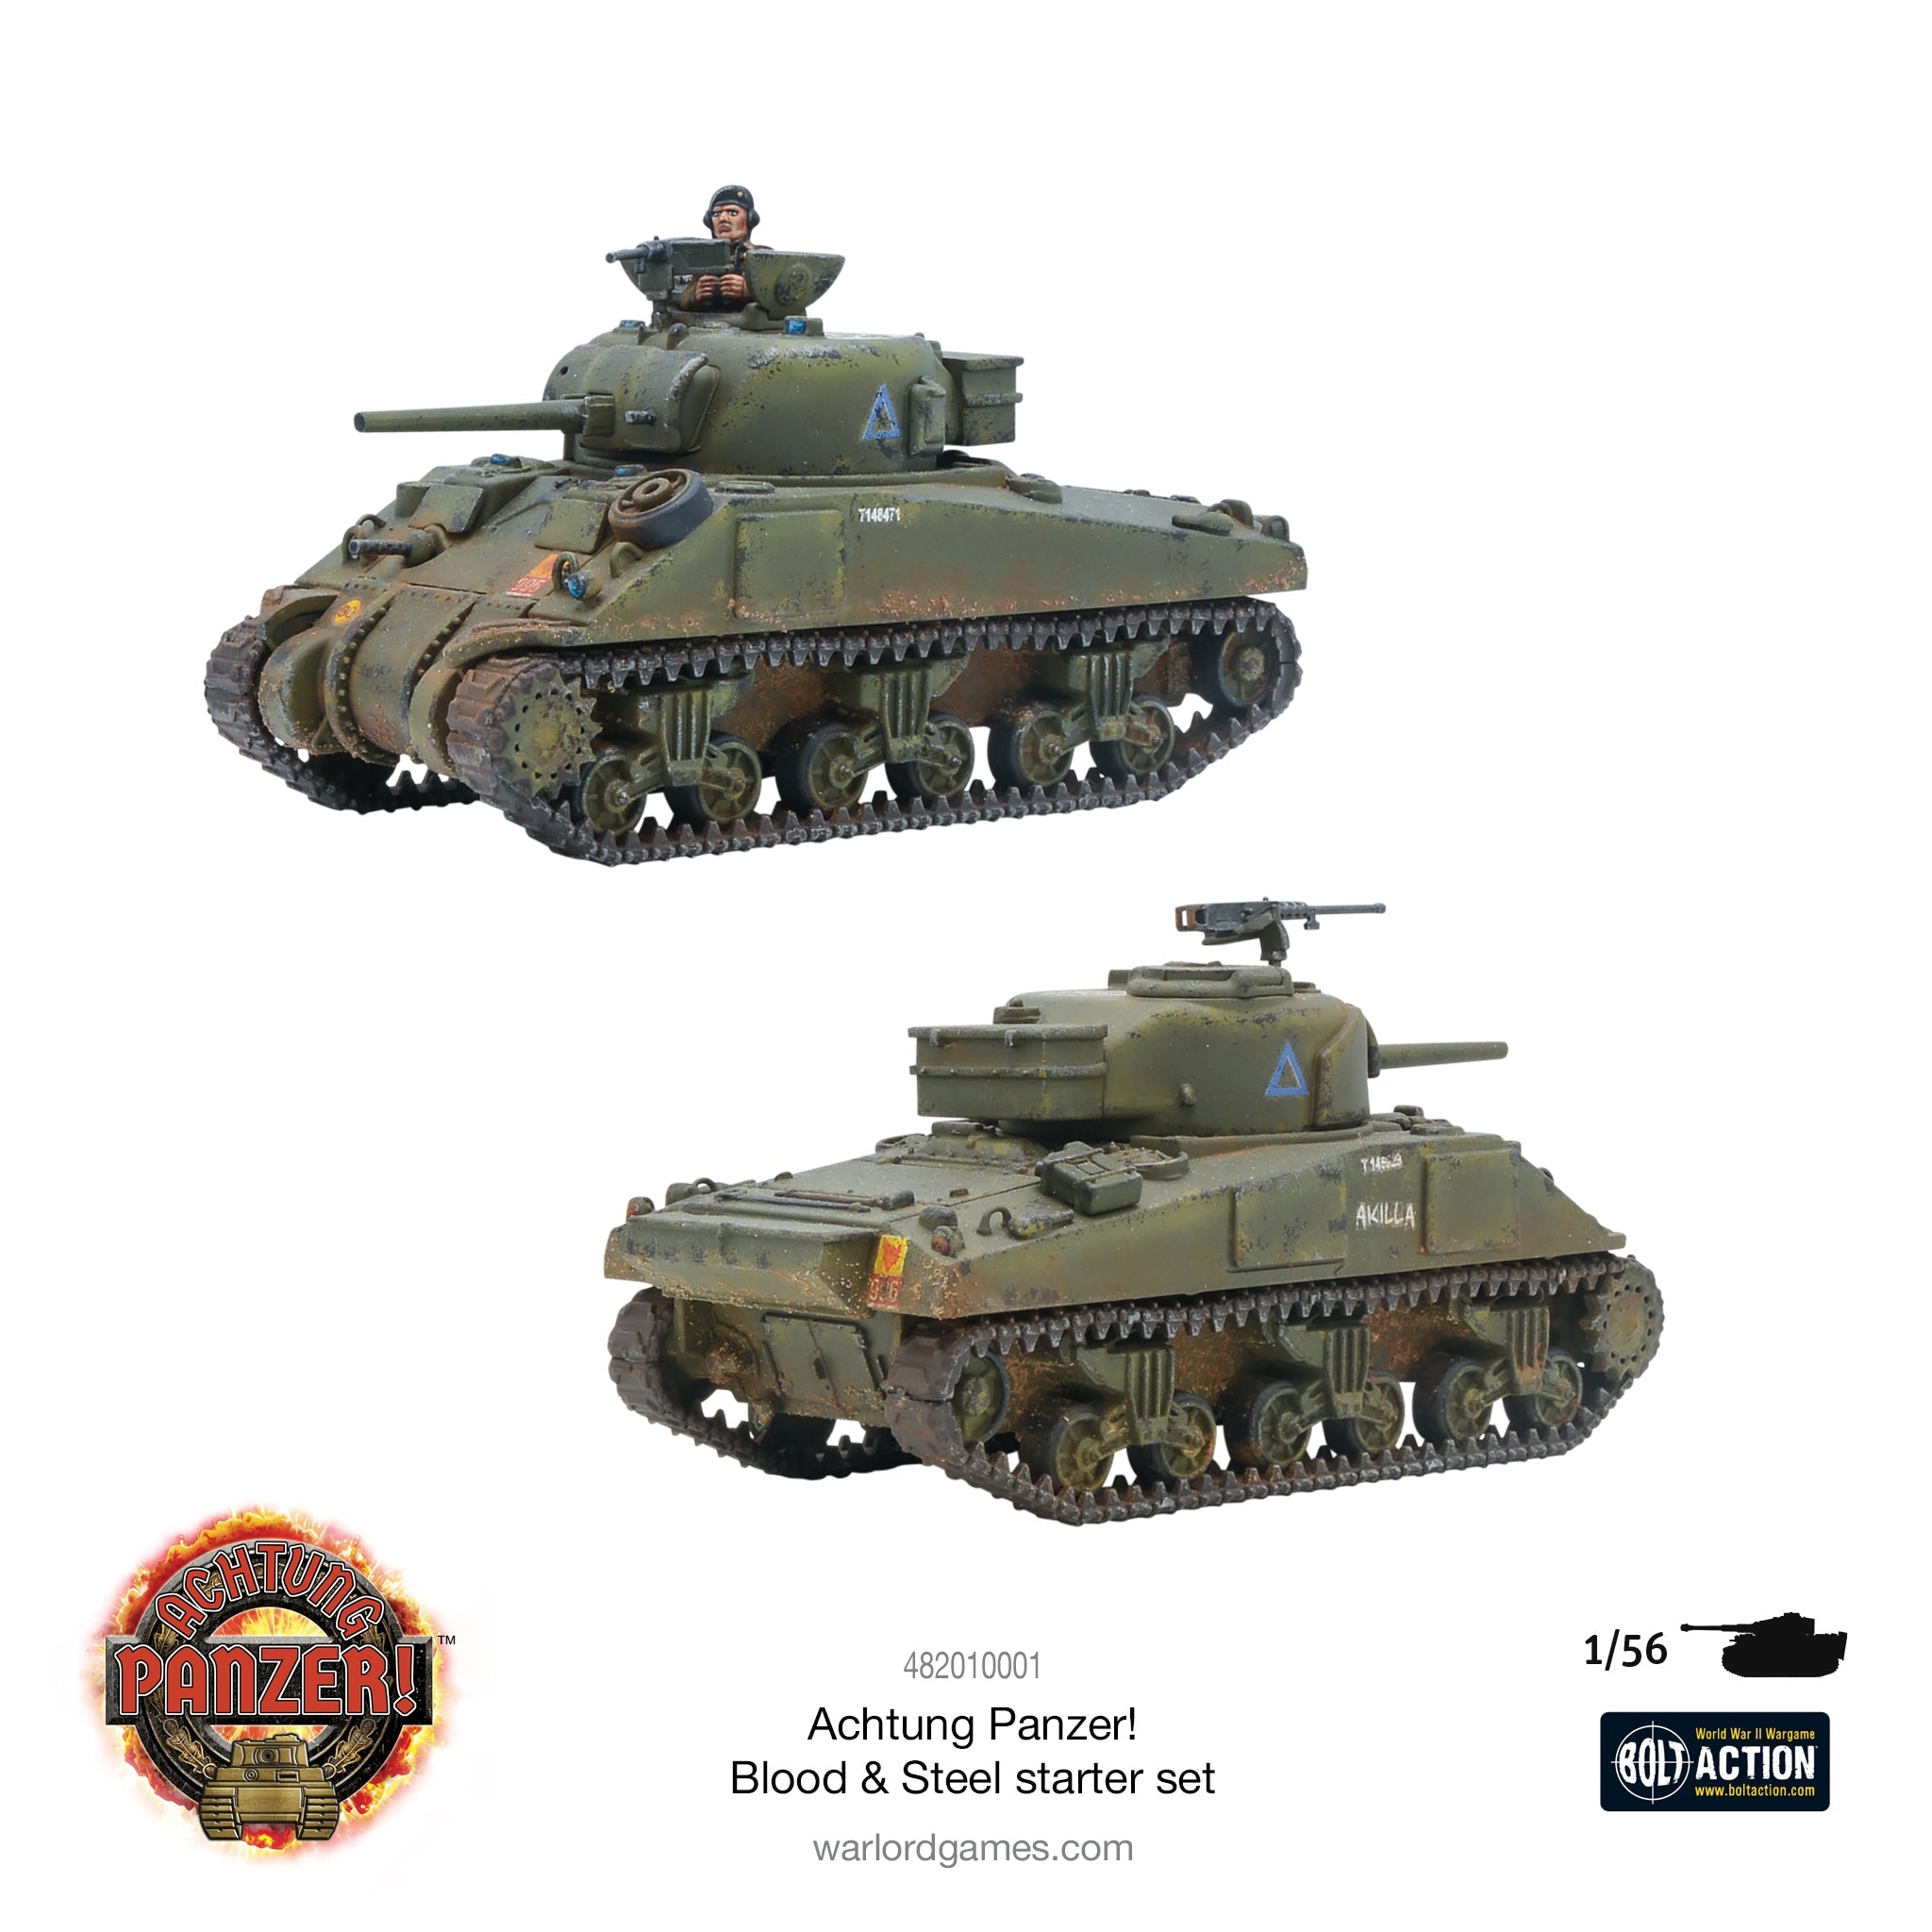 Achtung Panzer! Blood & Steel starter set